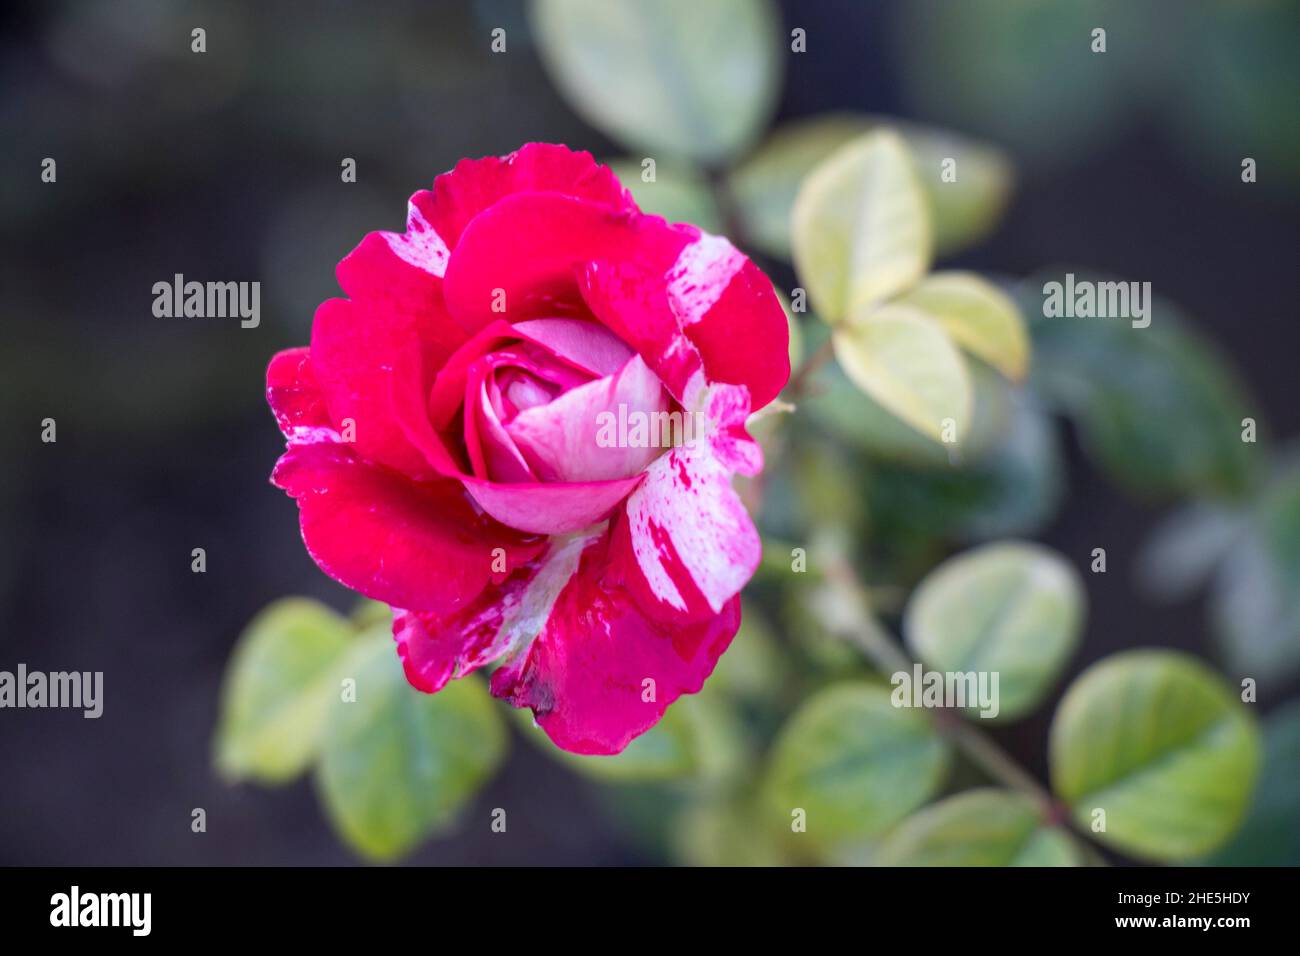 Bild der abradeten dabra-Rosenblüte Stockfoto